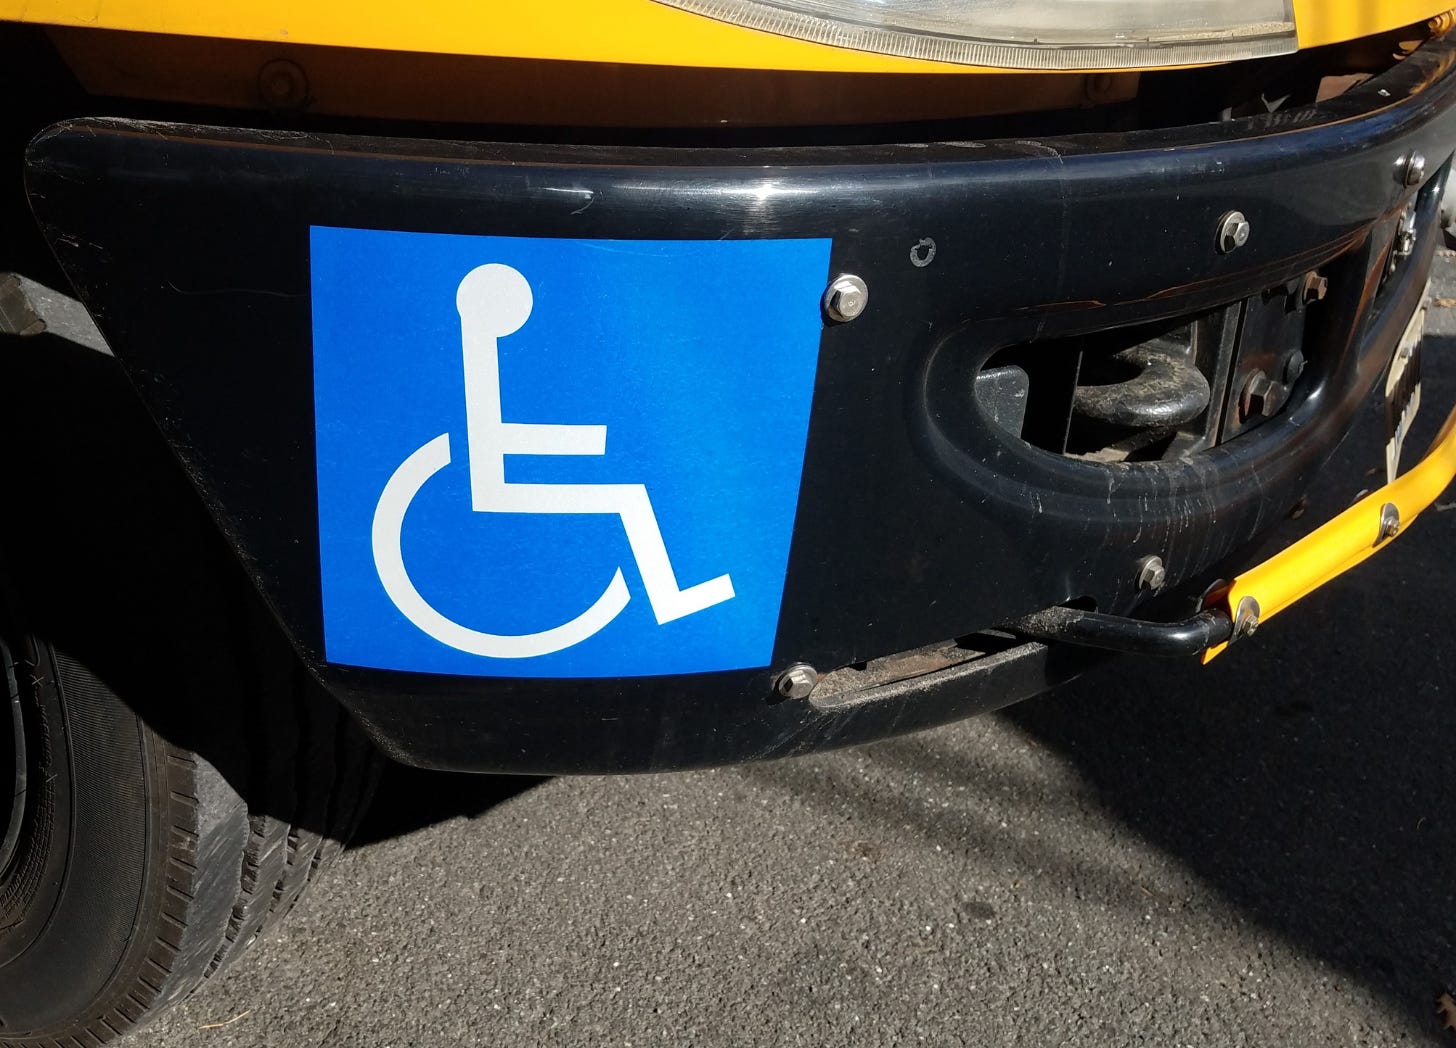 Wheelchair symbol on a bumper sticker